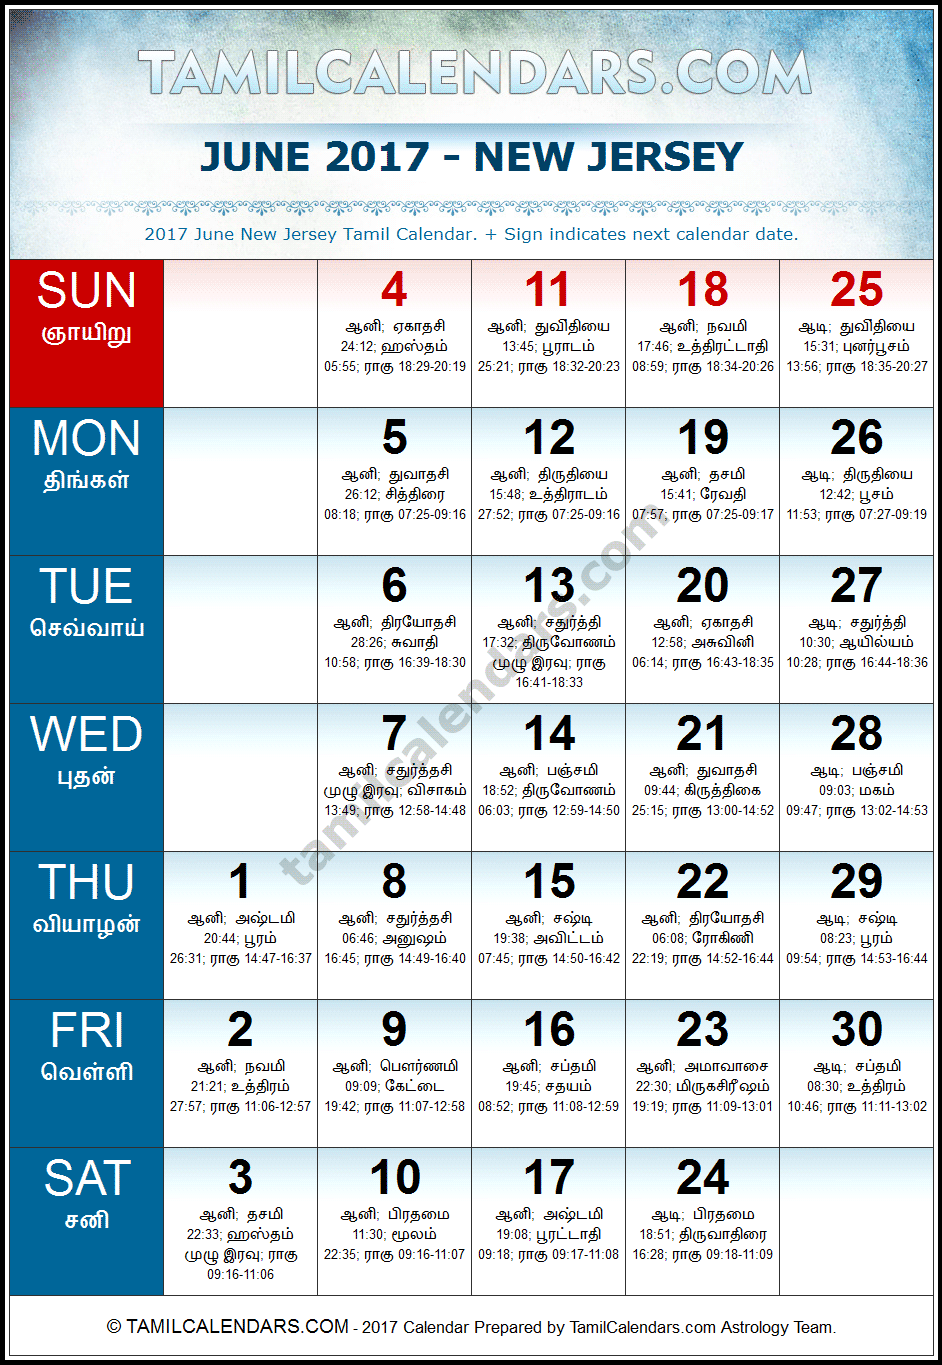 June 2017 Tamil Calendar for New Jersey, USA